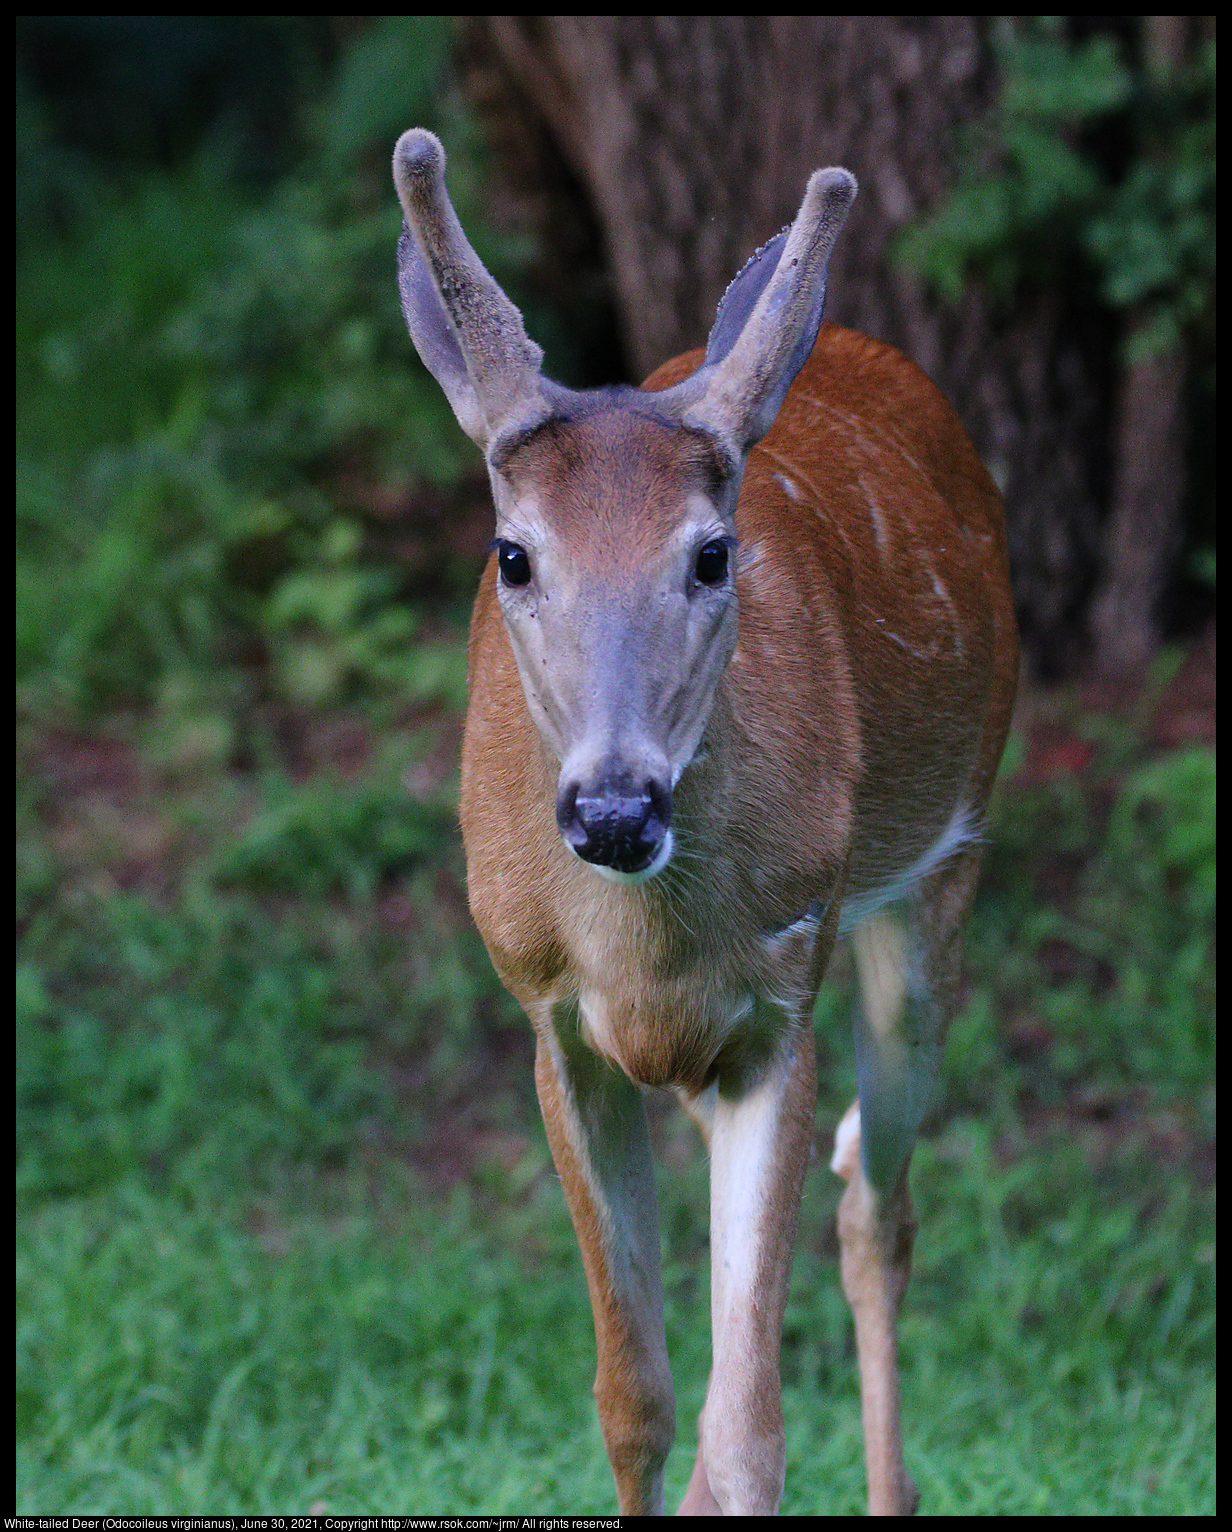 White-tailed Deer (Odocoileus virginianus), June 30, 2021